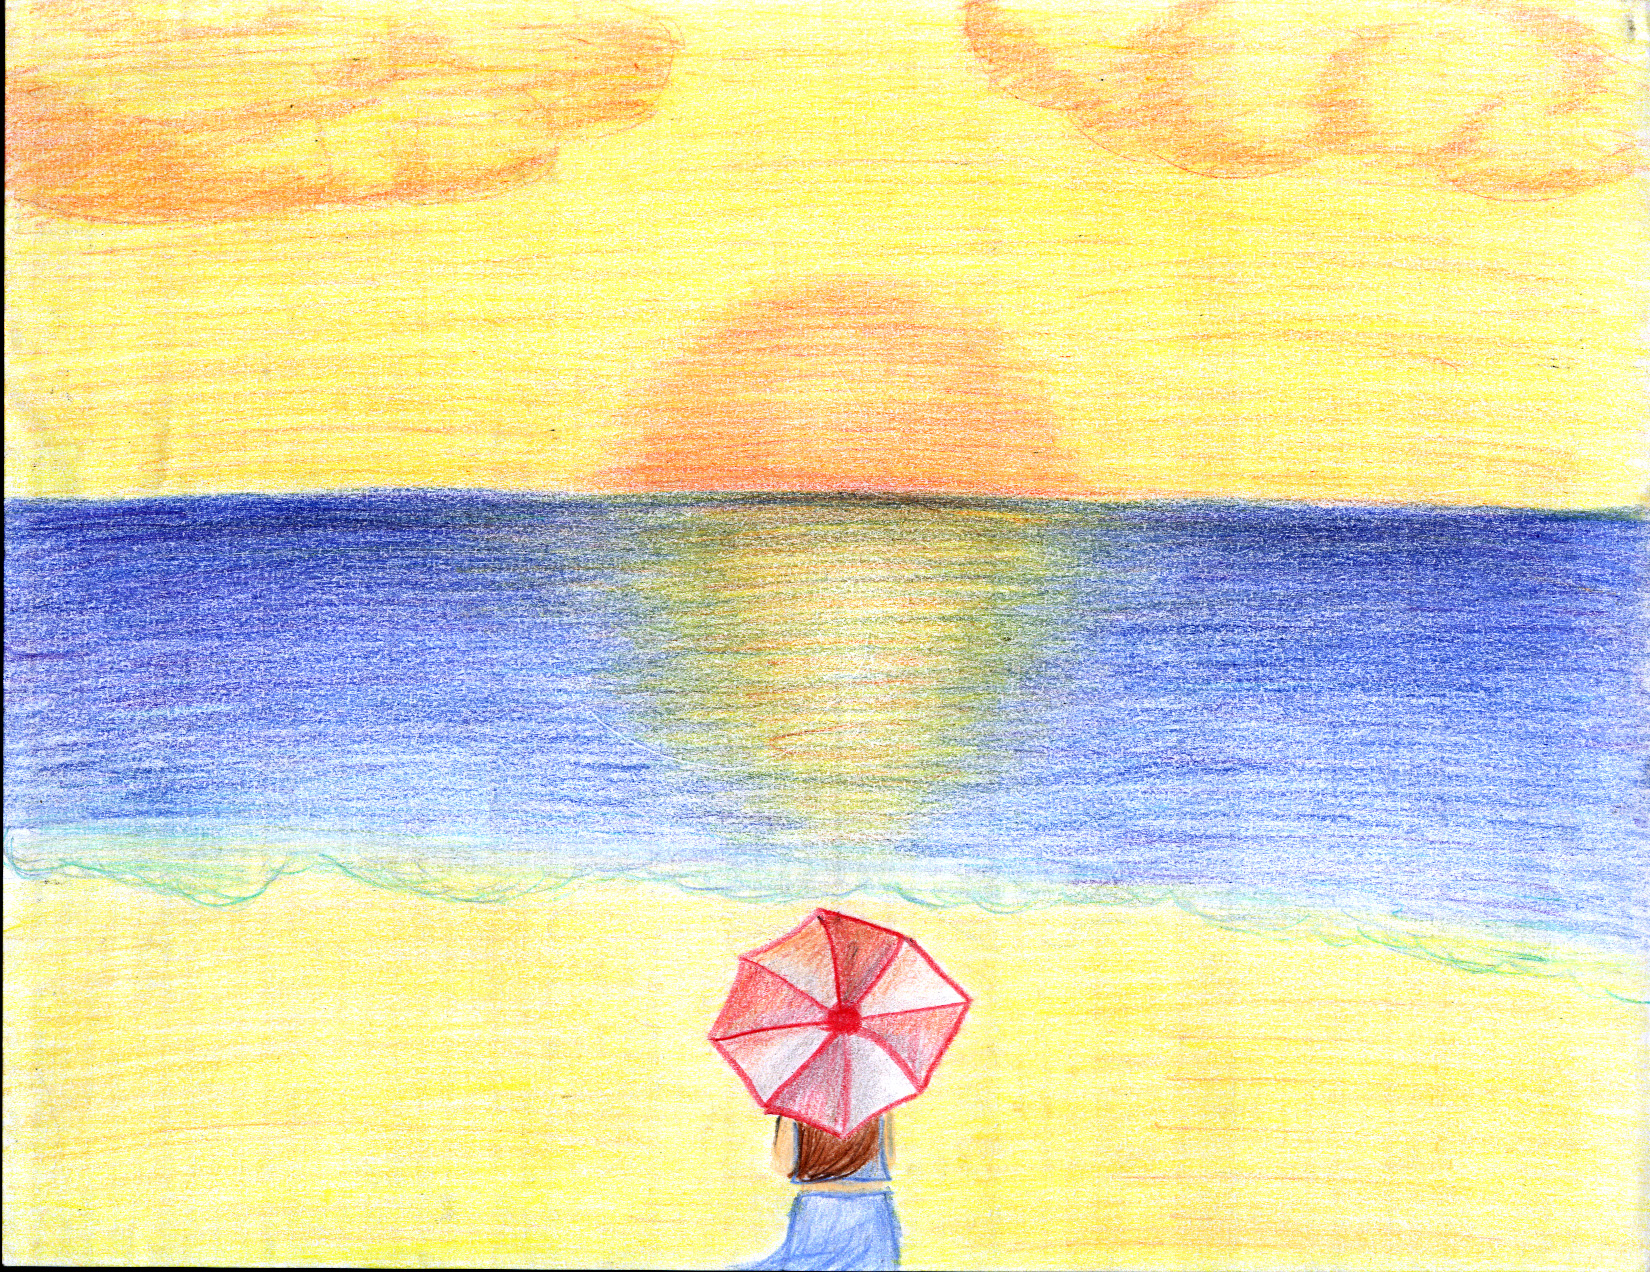 sunset umbrella by Chibi-chan